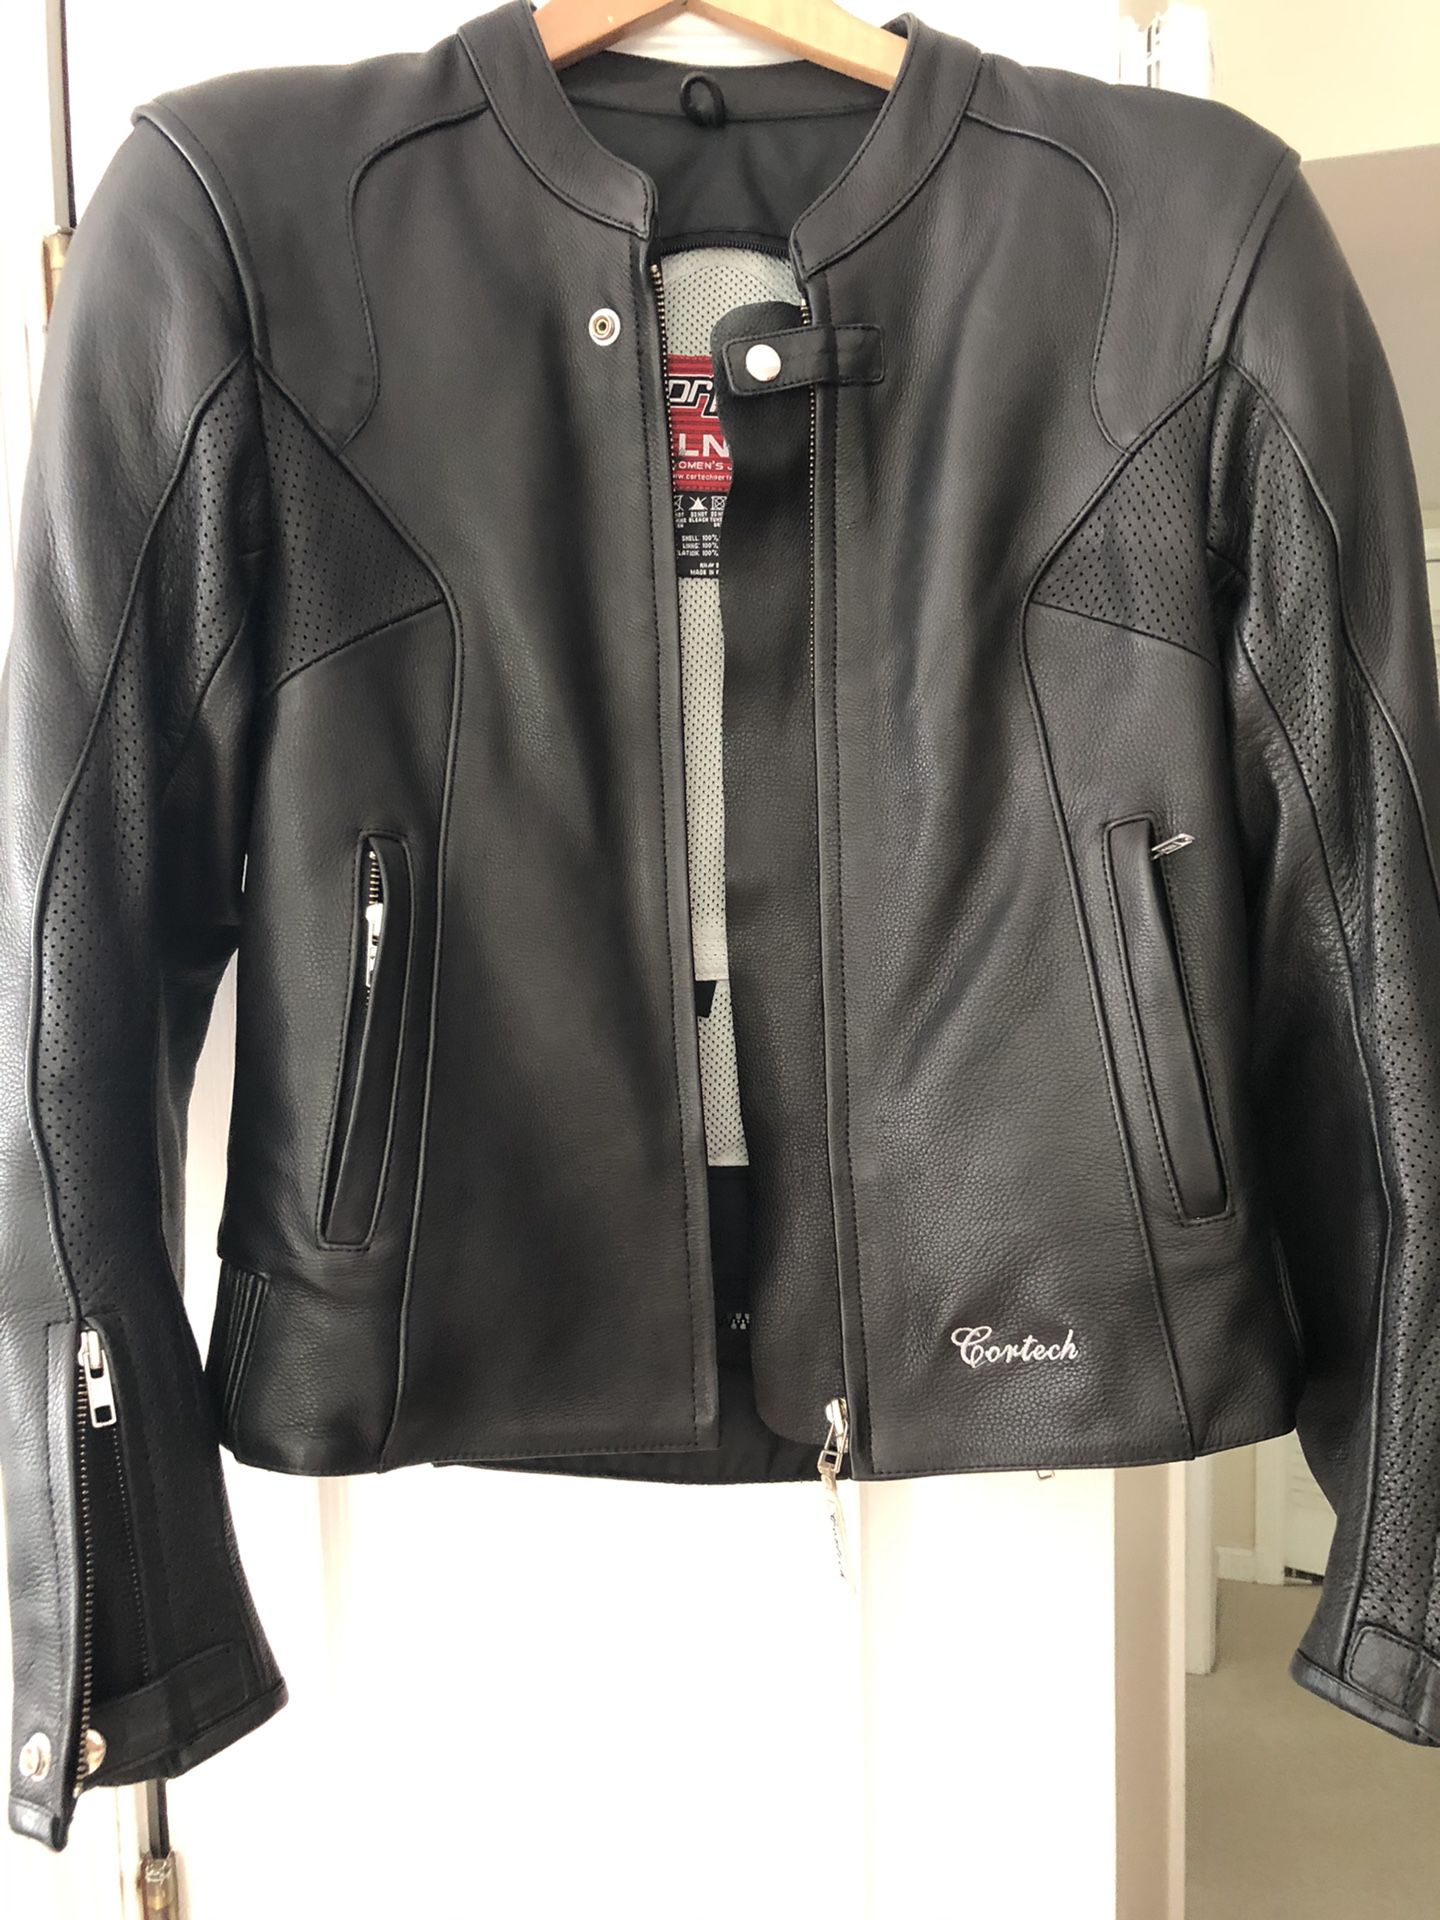 CORTECH Women’s Motorcycle Jacket~BRAND NEW